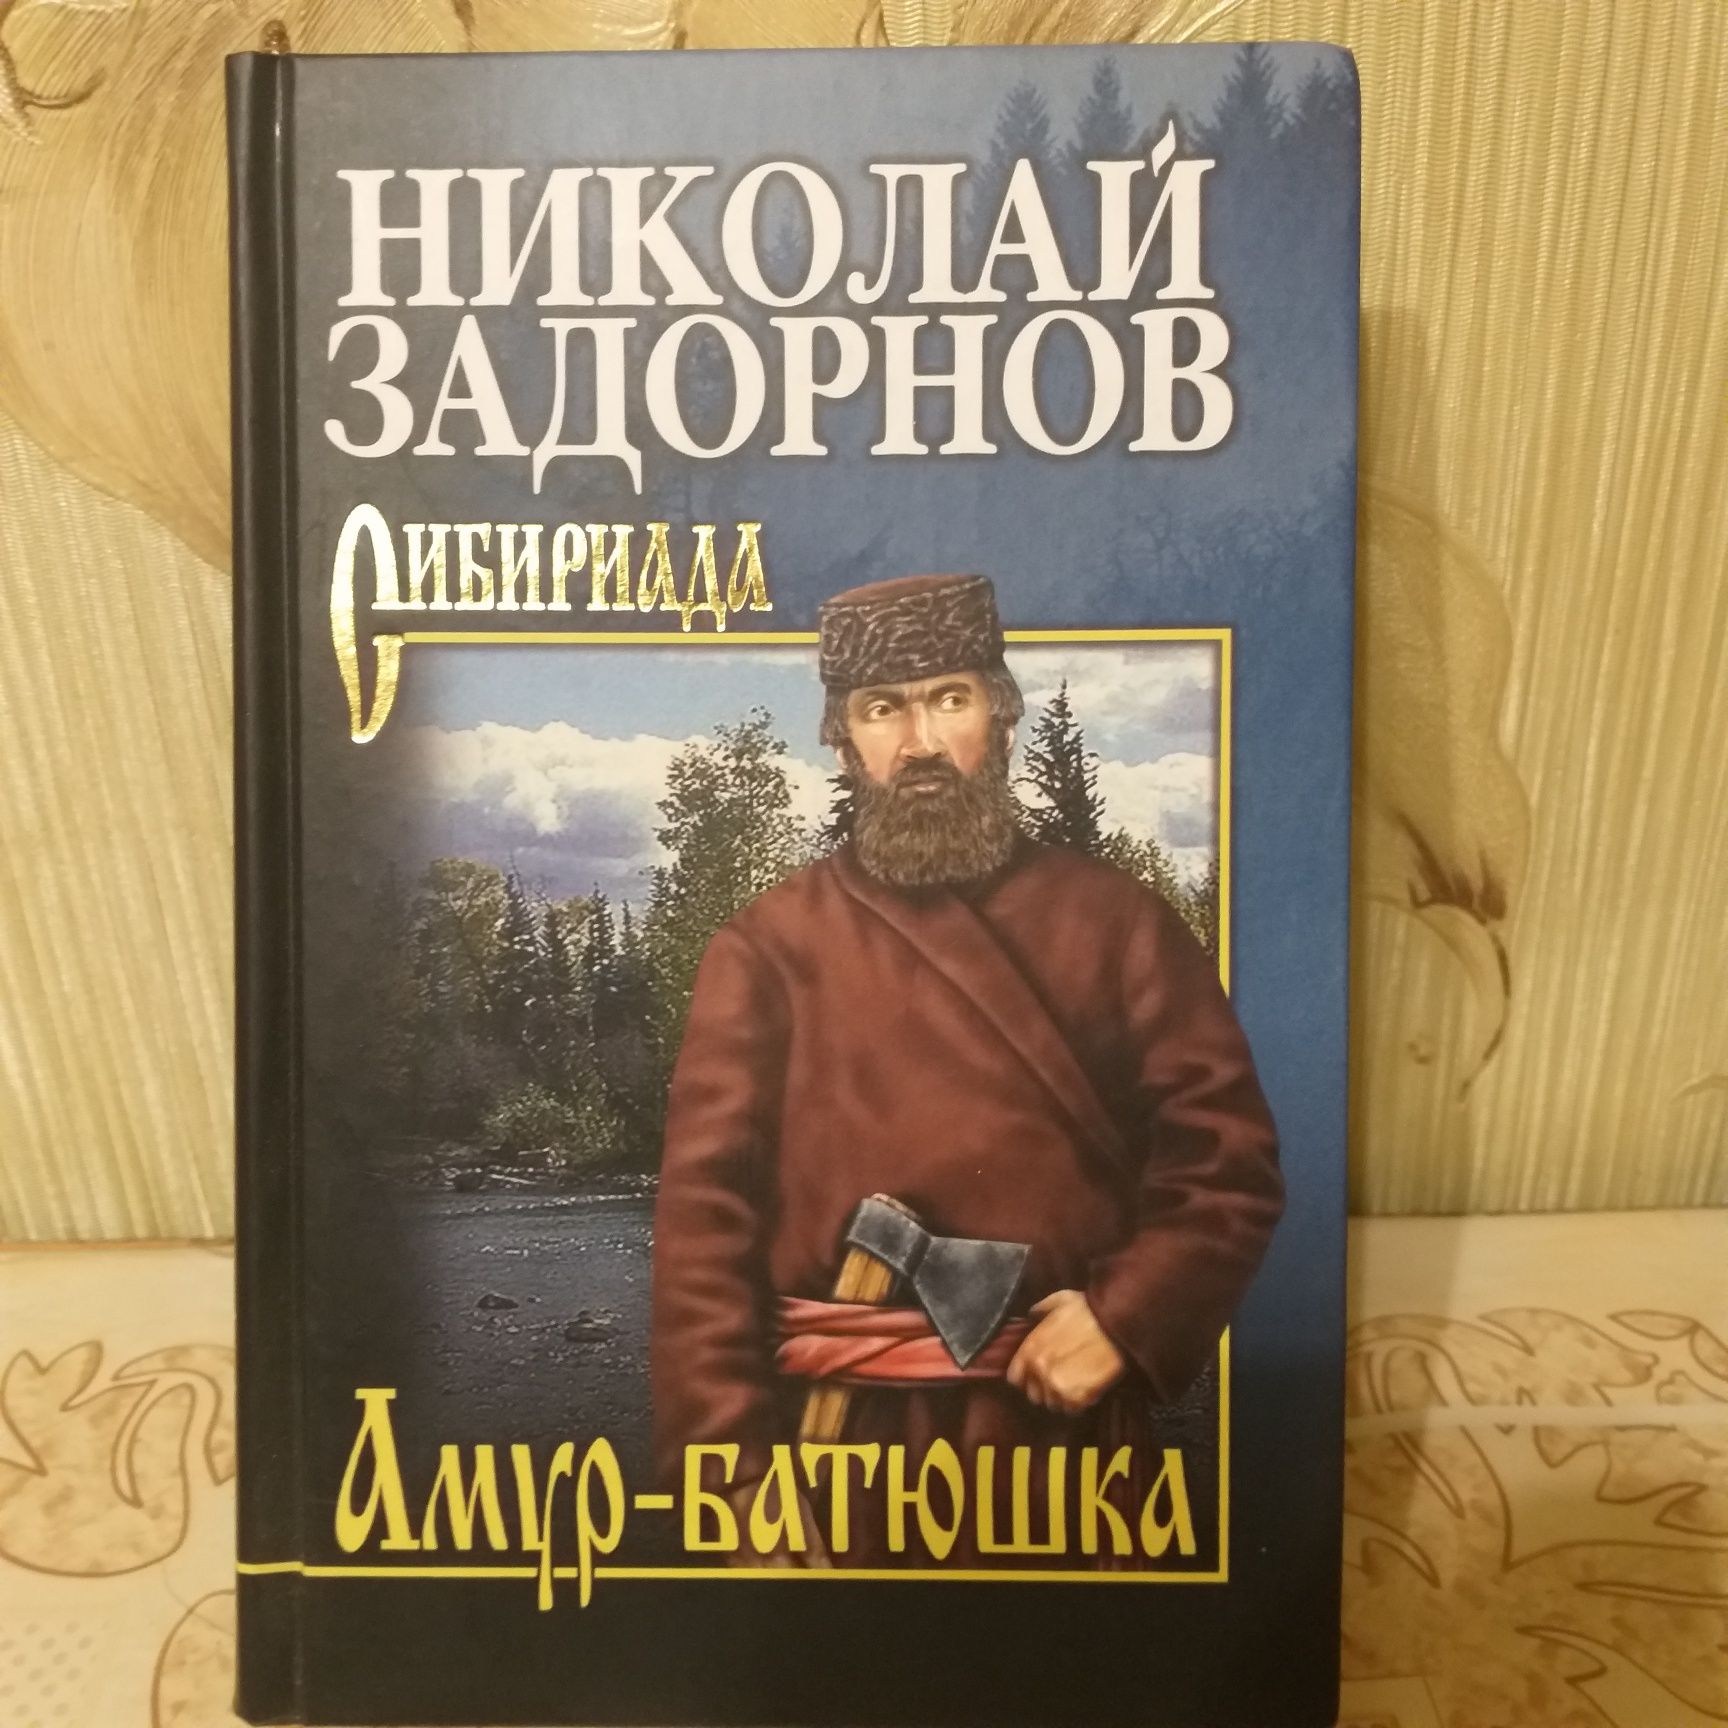 Книги Николая Задорного.